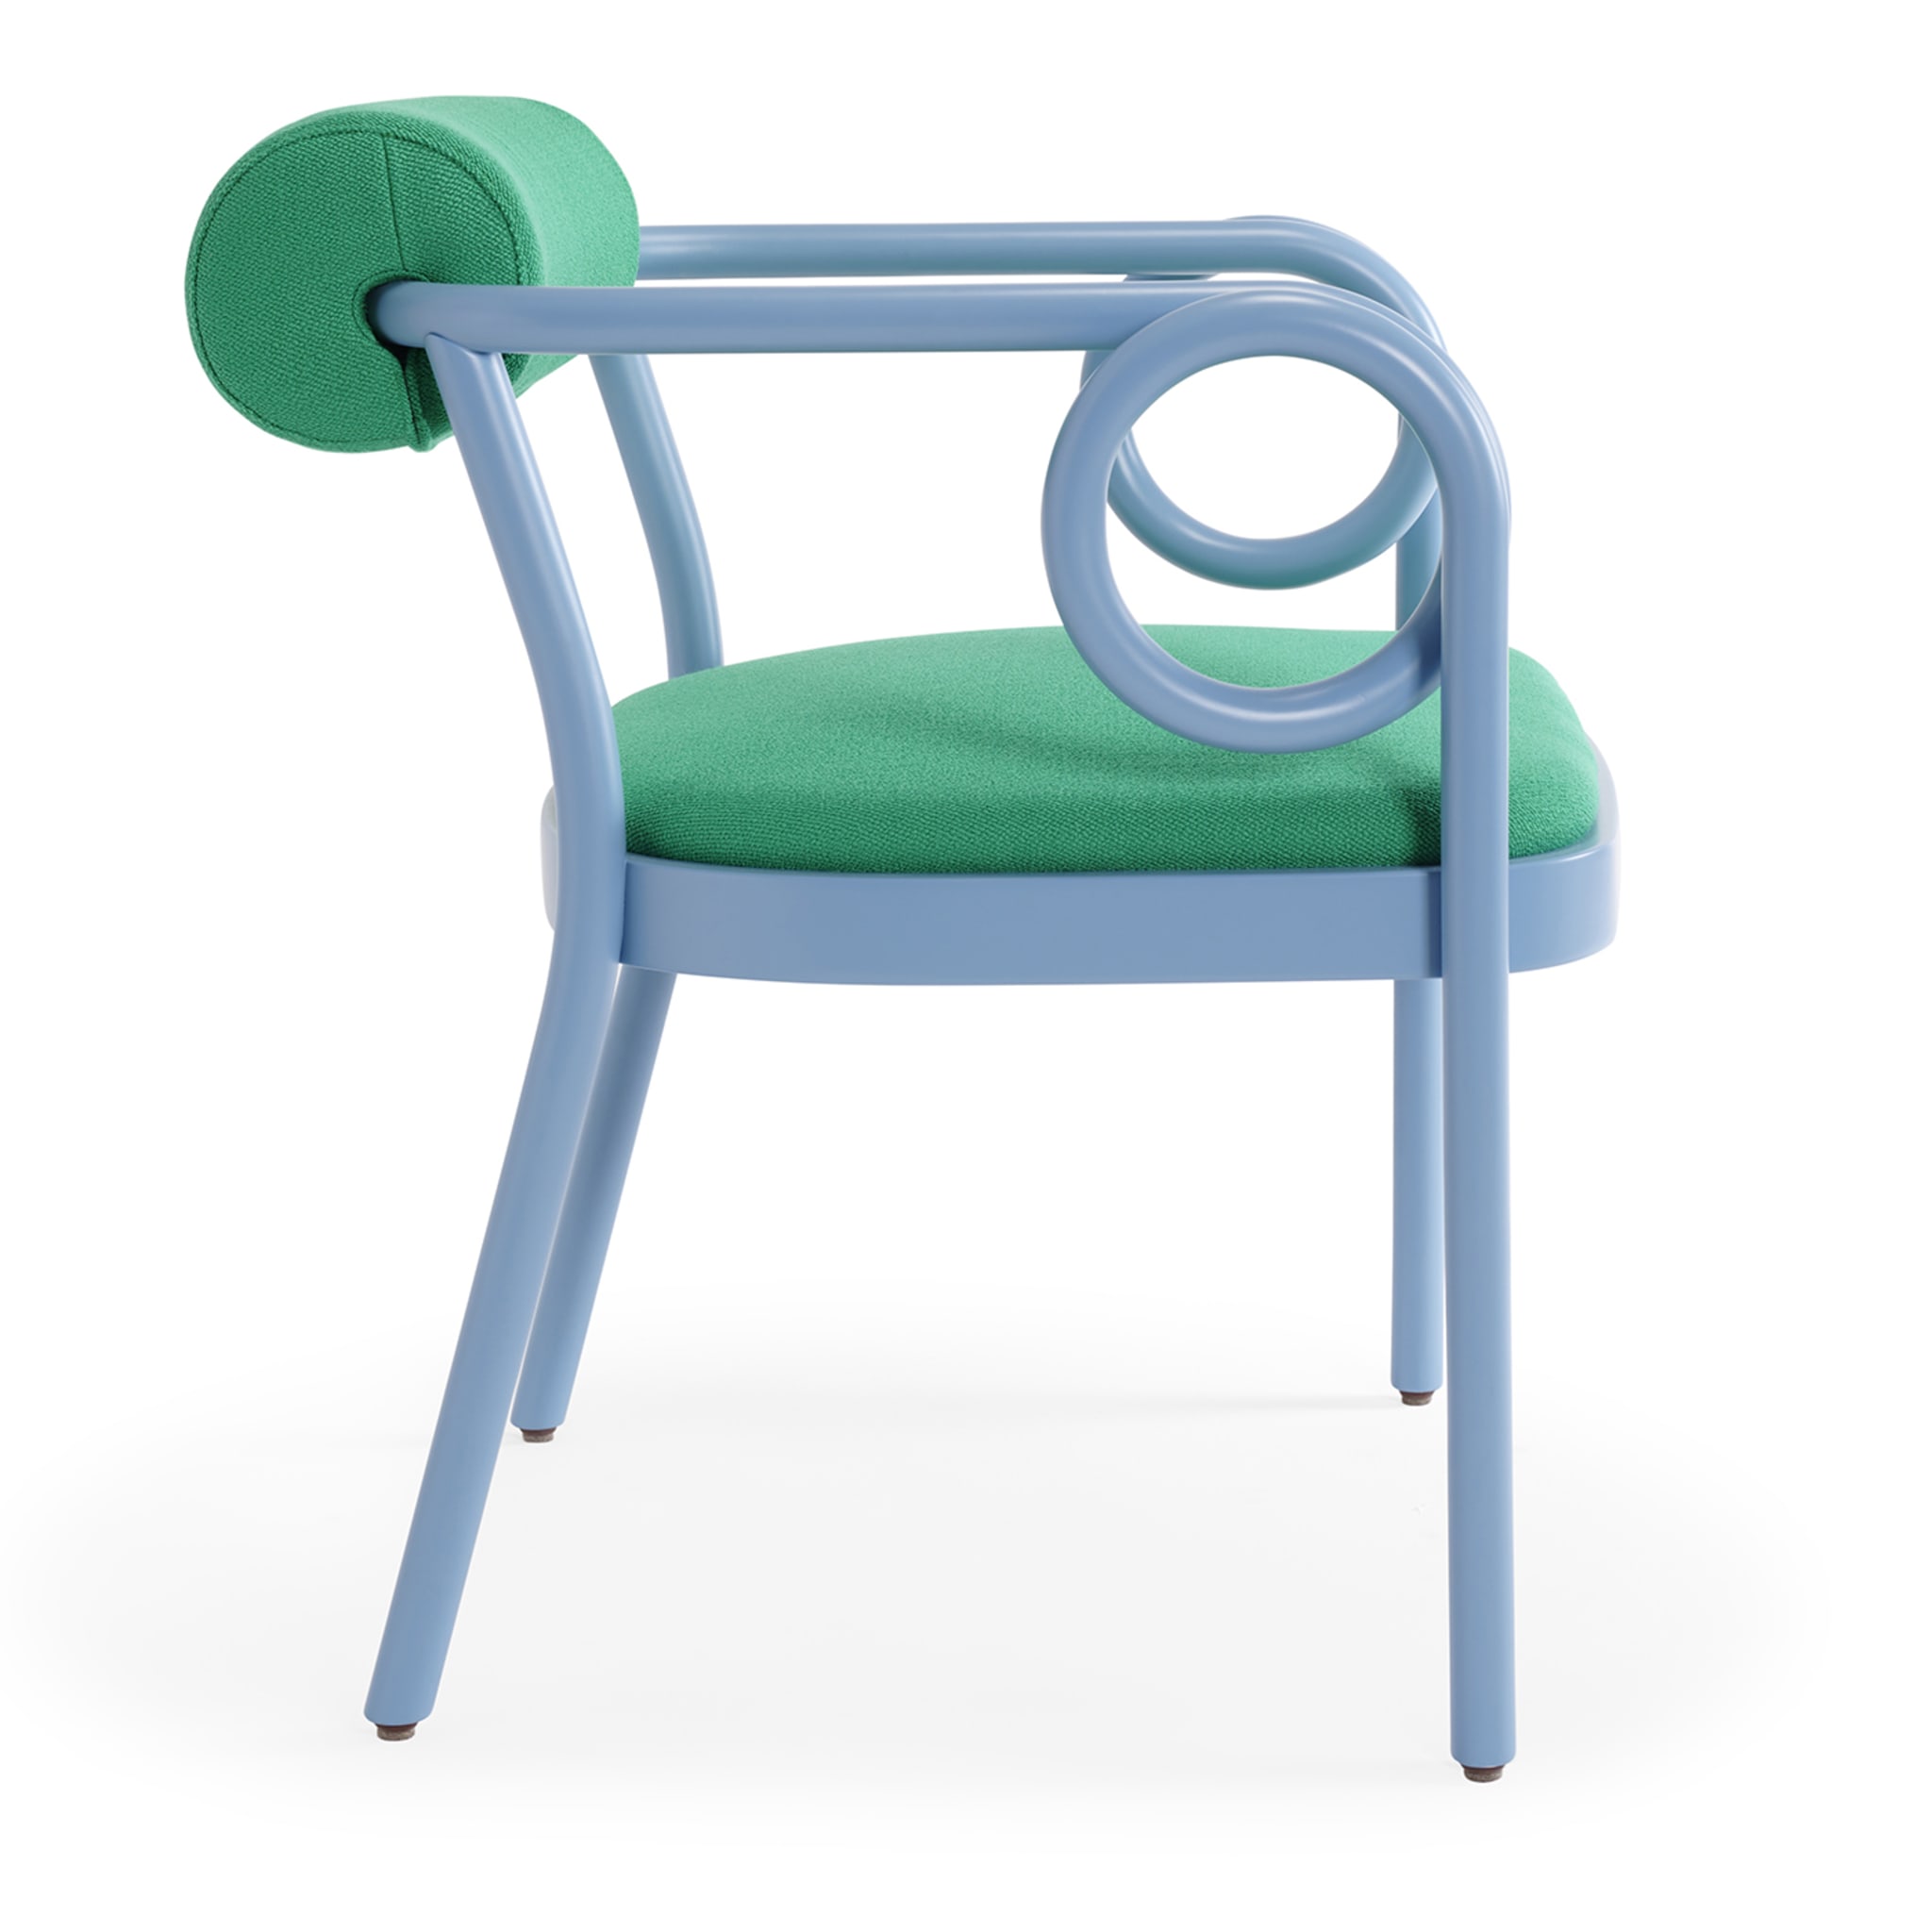 Loop Green & Light Blue Lounge Chair by India Mahdavi - Alternative view 2